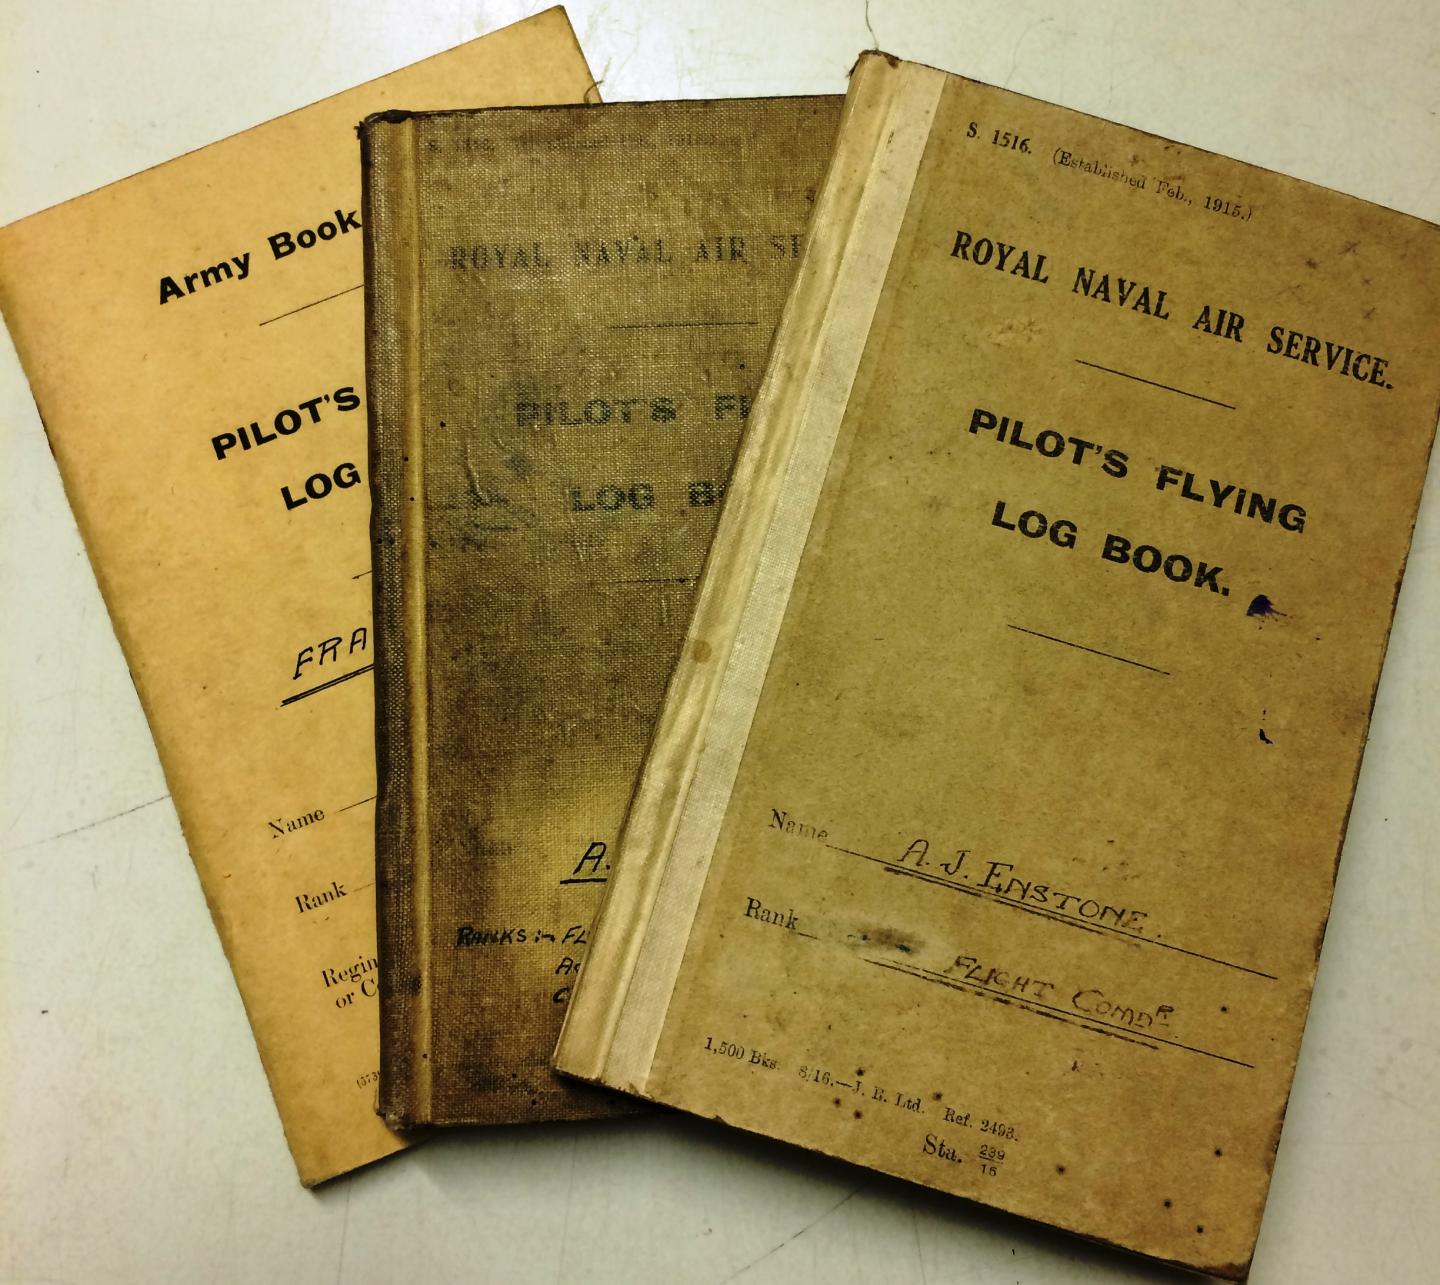 The pilot books belonging to Albert James Enstone